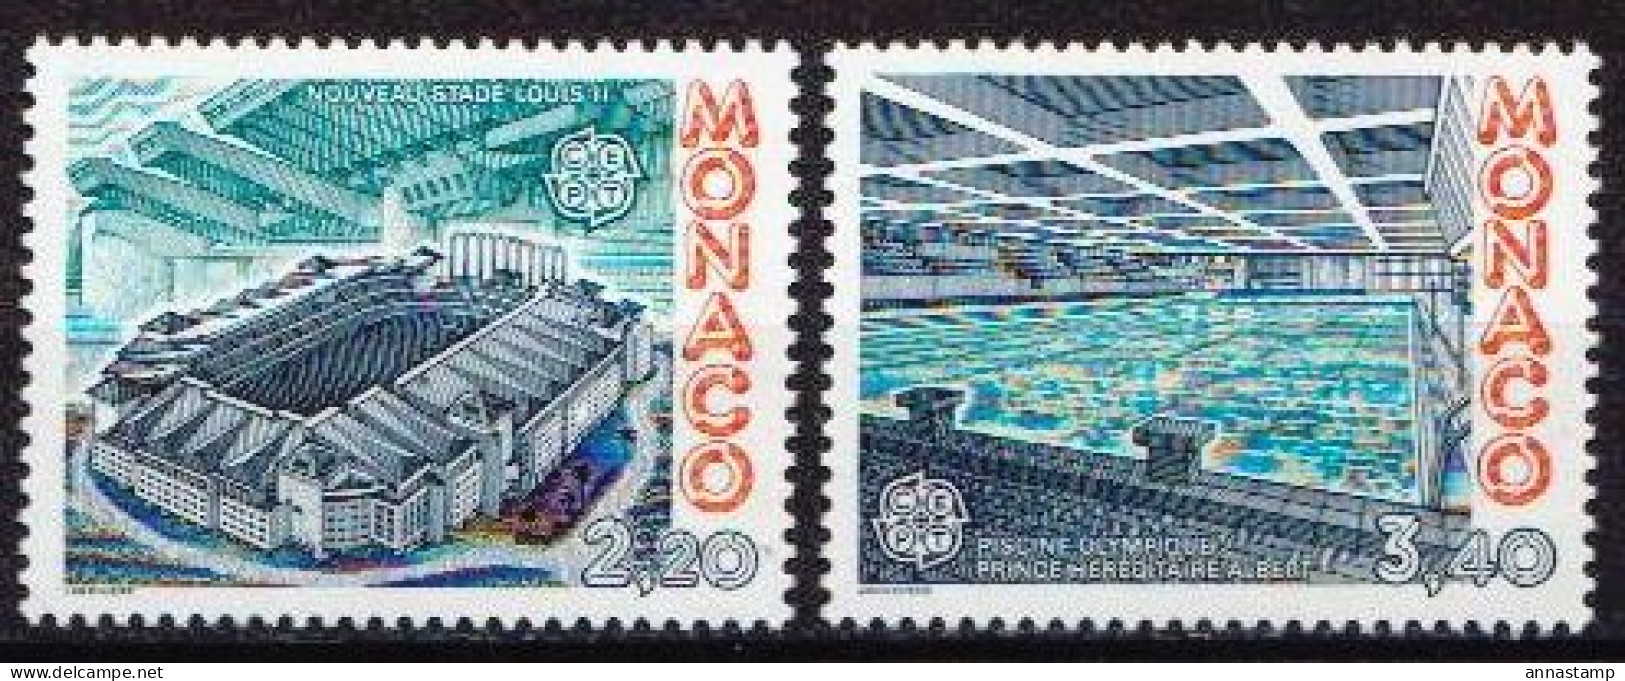 Monaco MNH Set - 1987